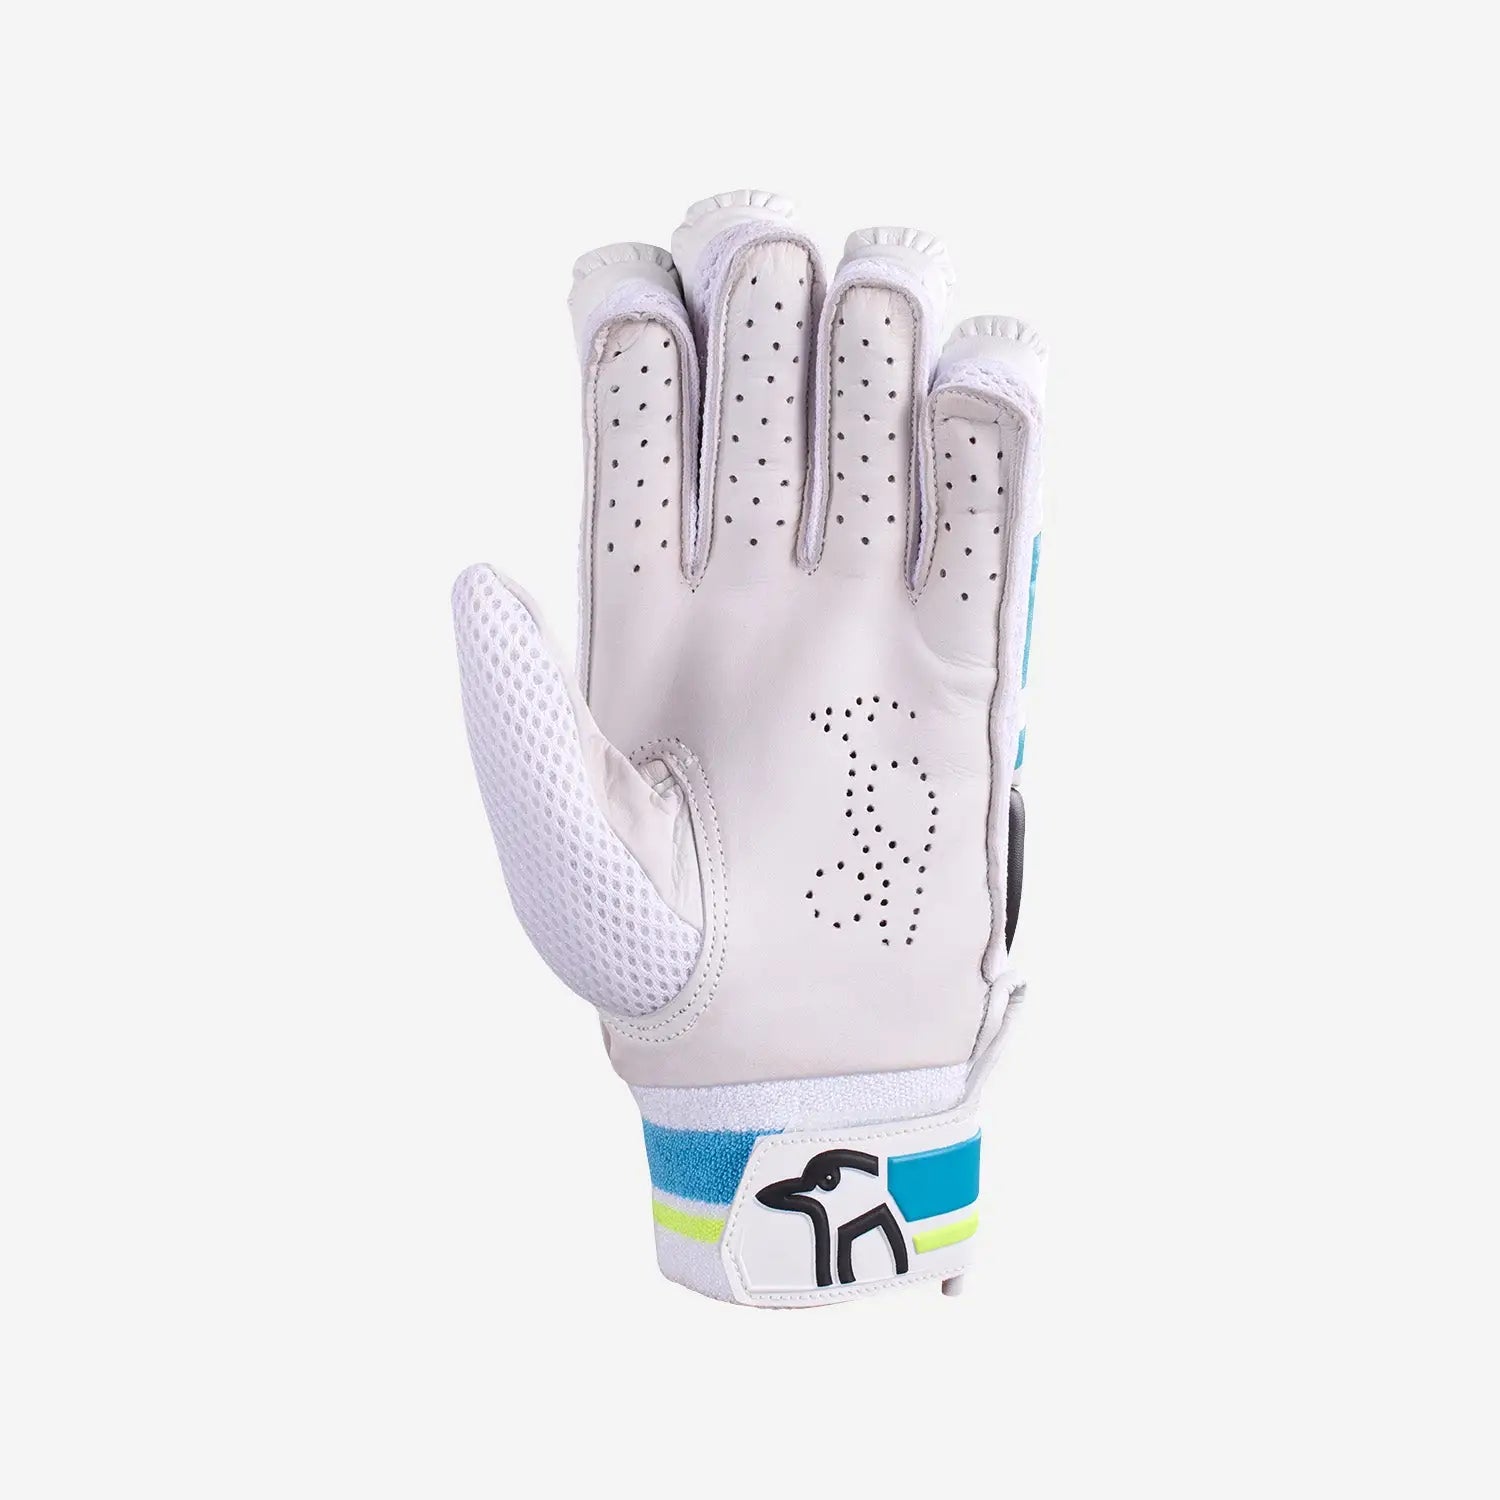 Kookaburra RAPID 4.1 Cricket Batting Gloves Comfort and Protection - GLOVE - BATTING